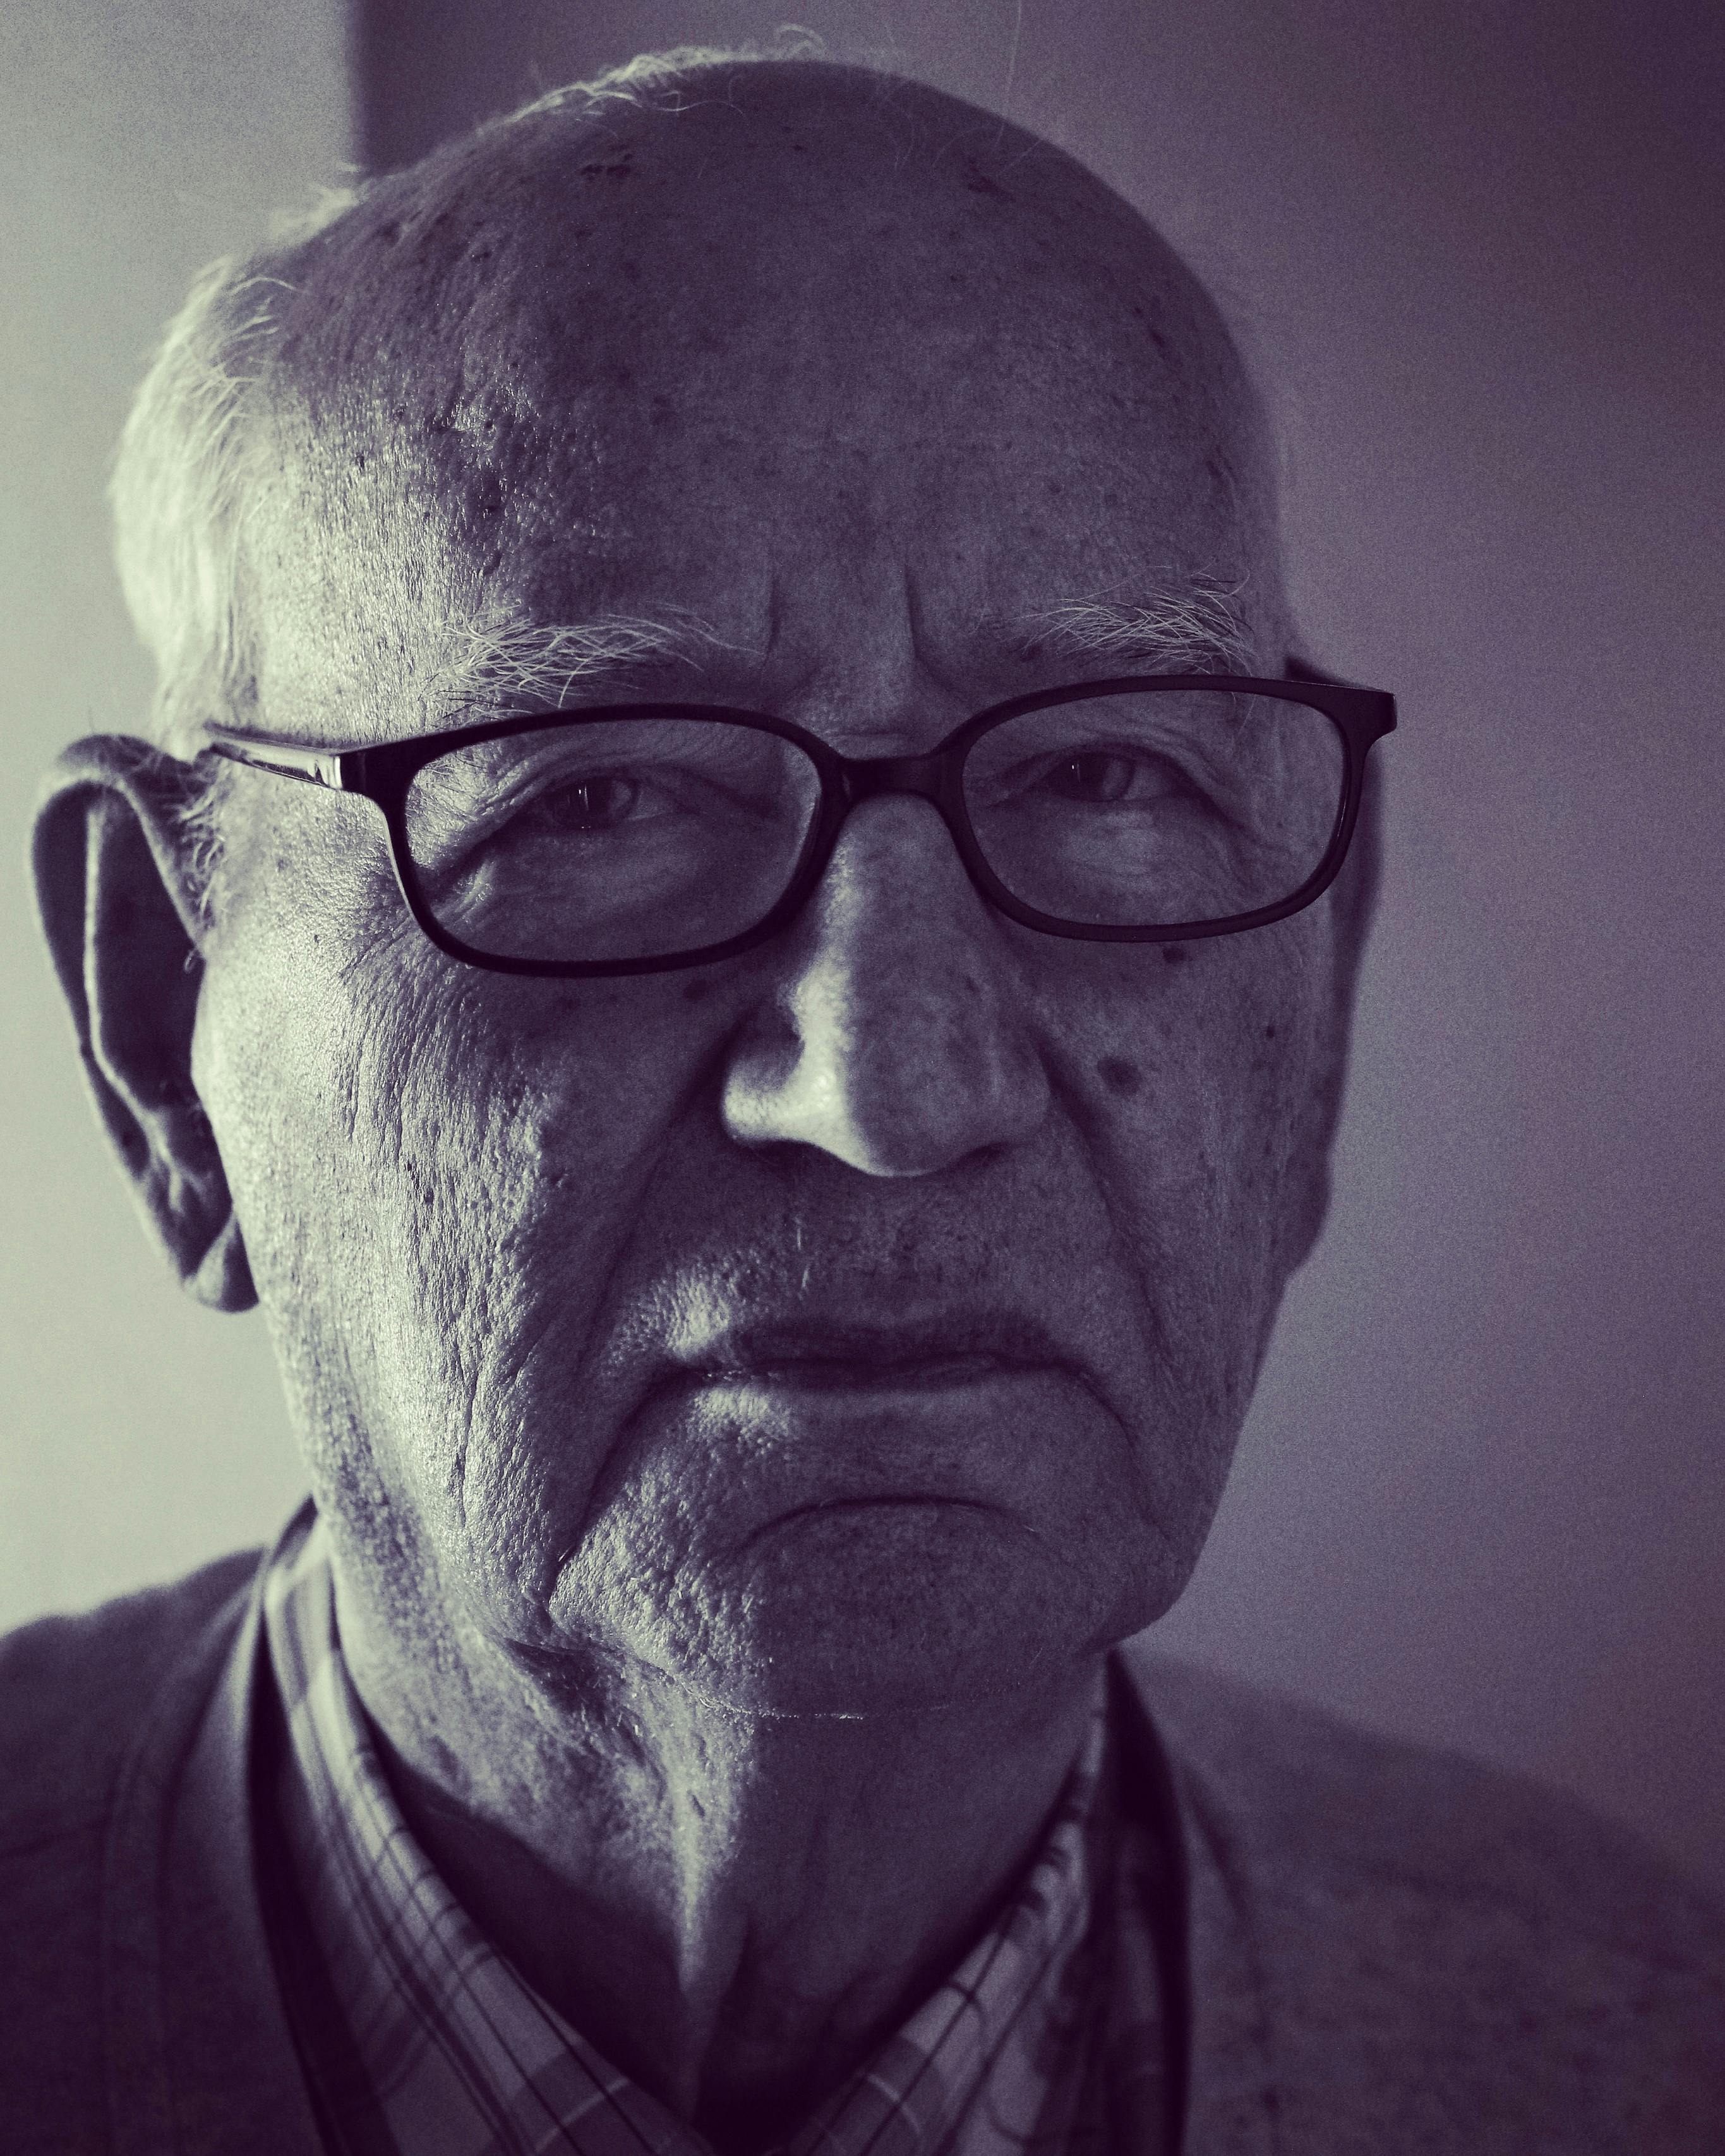 A man wearing glasses | Source: Pexels